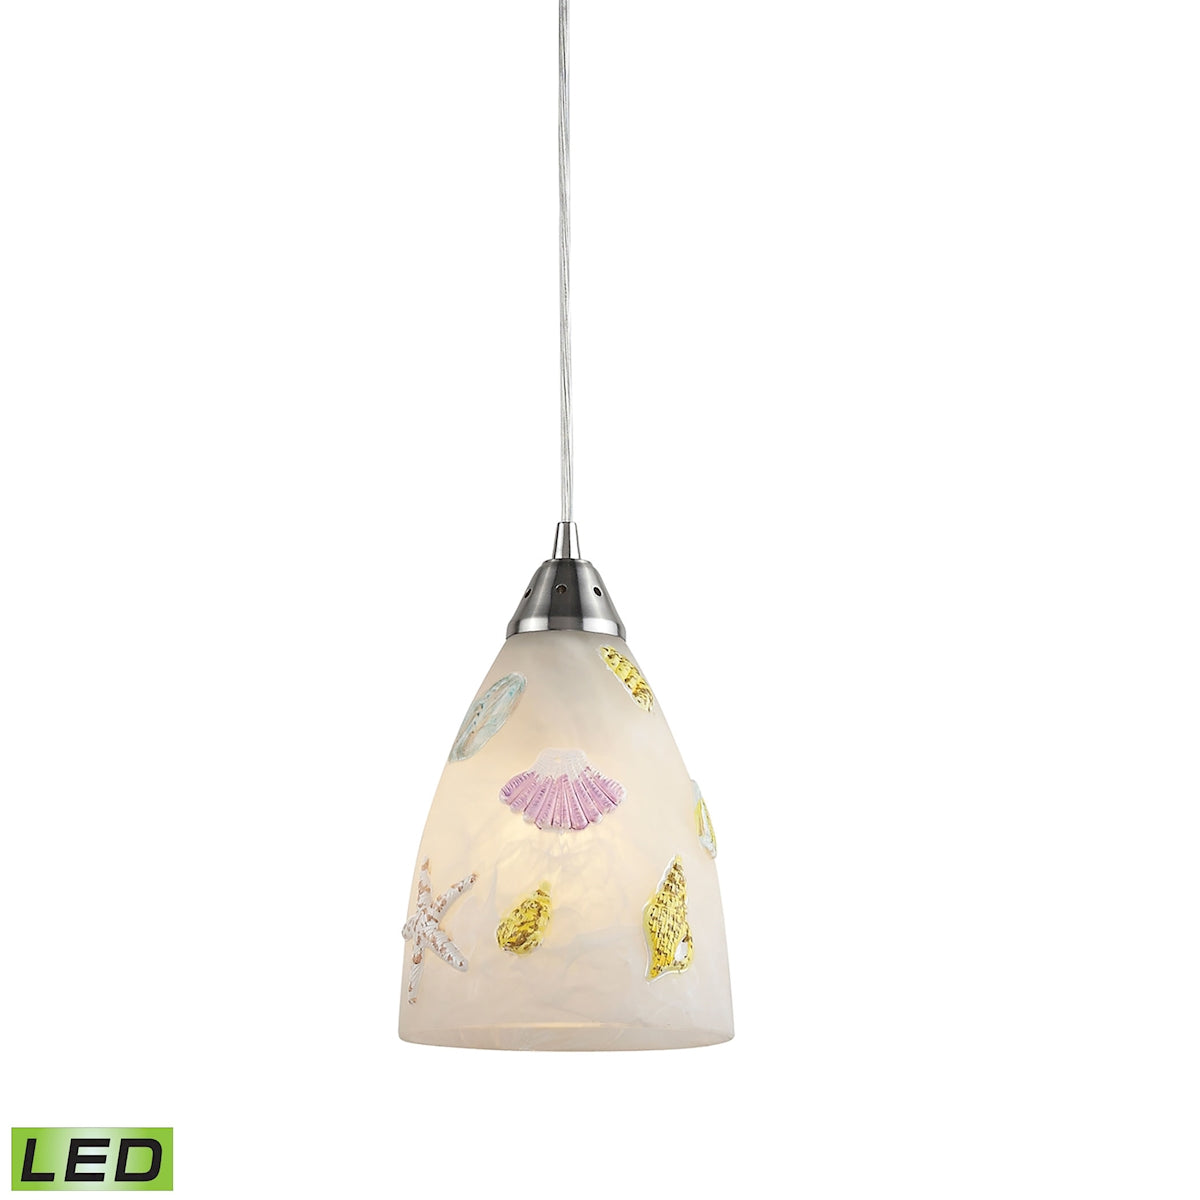 ELK Lighting 20000/1-LED Seashore 1-Light Mini Pendant in Satin Nickel with Painted Seashore Motif - Includes LED Bulb